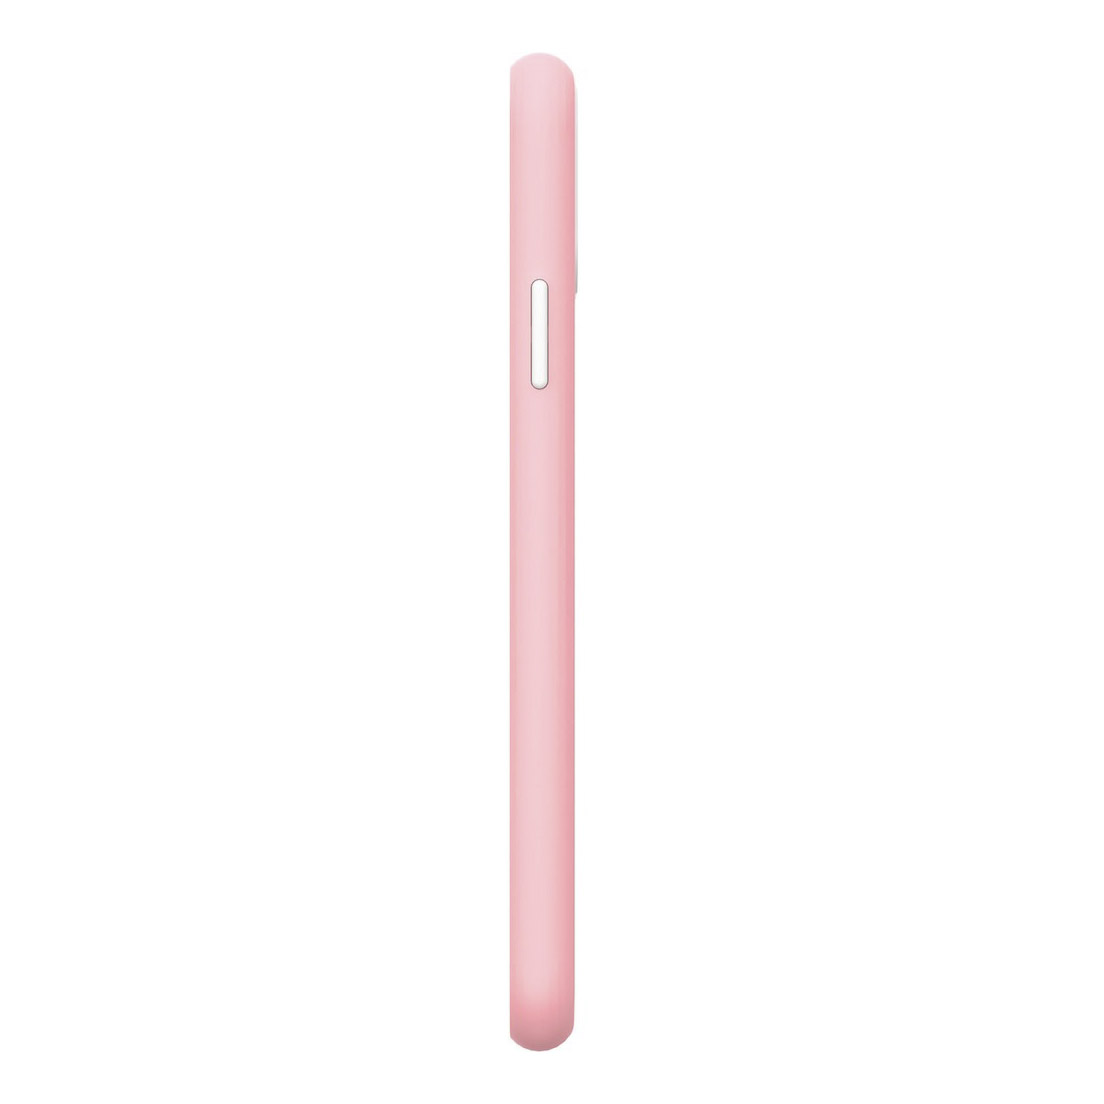 Чехол SwitchEasy Colors для Apple iPhone 11 Pro Max, розовый - фото 5